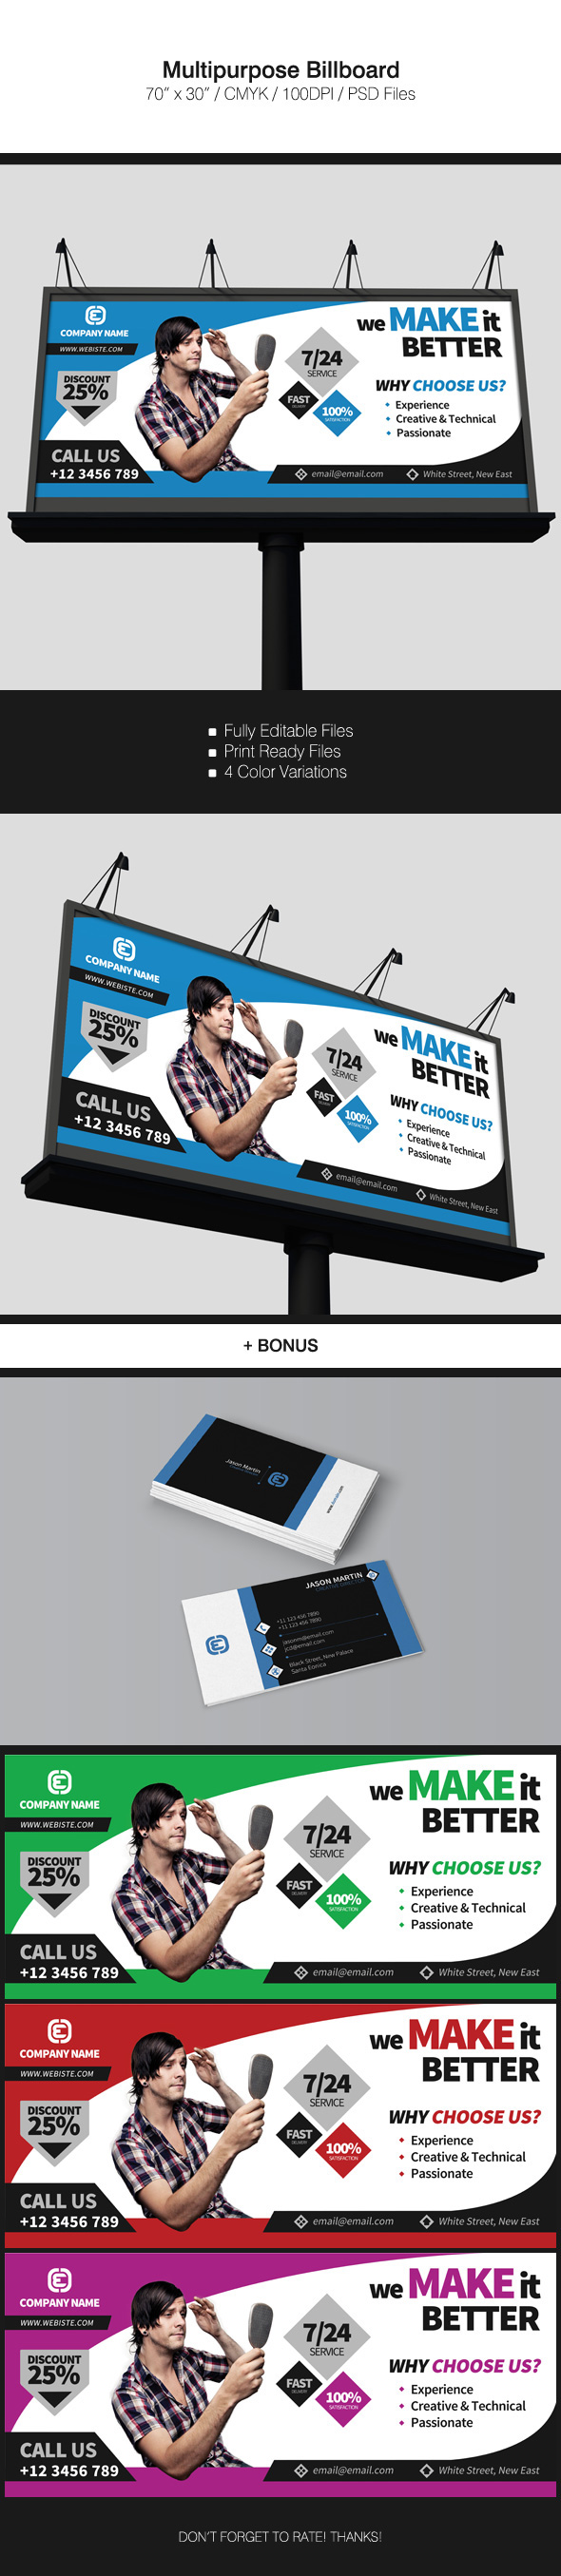 billboard blue billboard Corporate Billboard multi purpose Multi-purpose Multipurpose Billboard